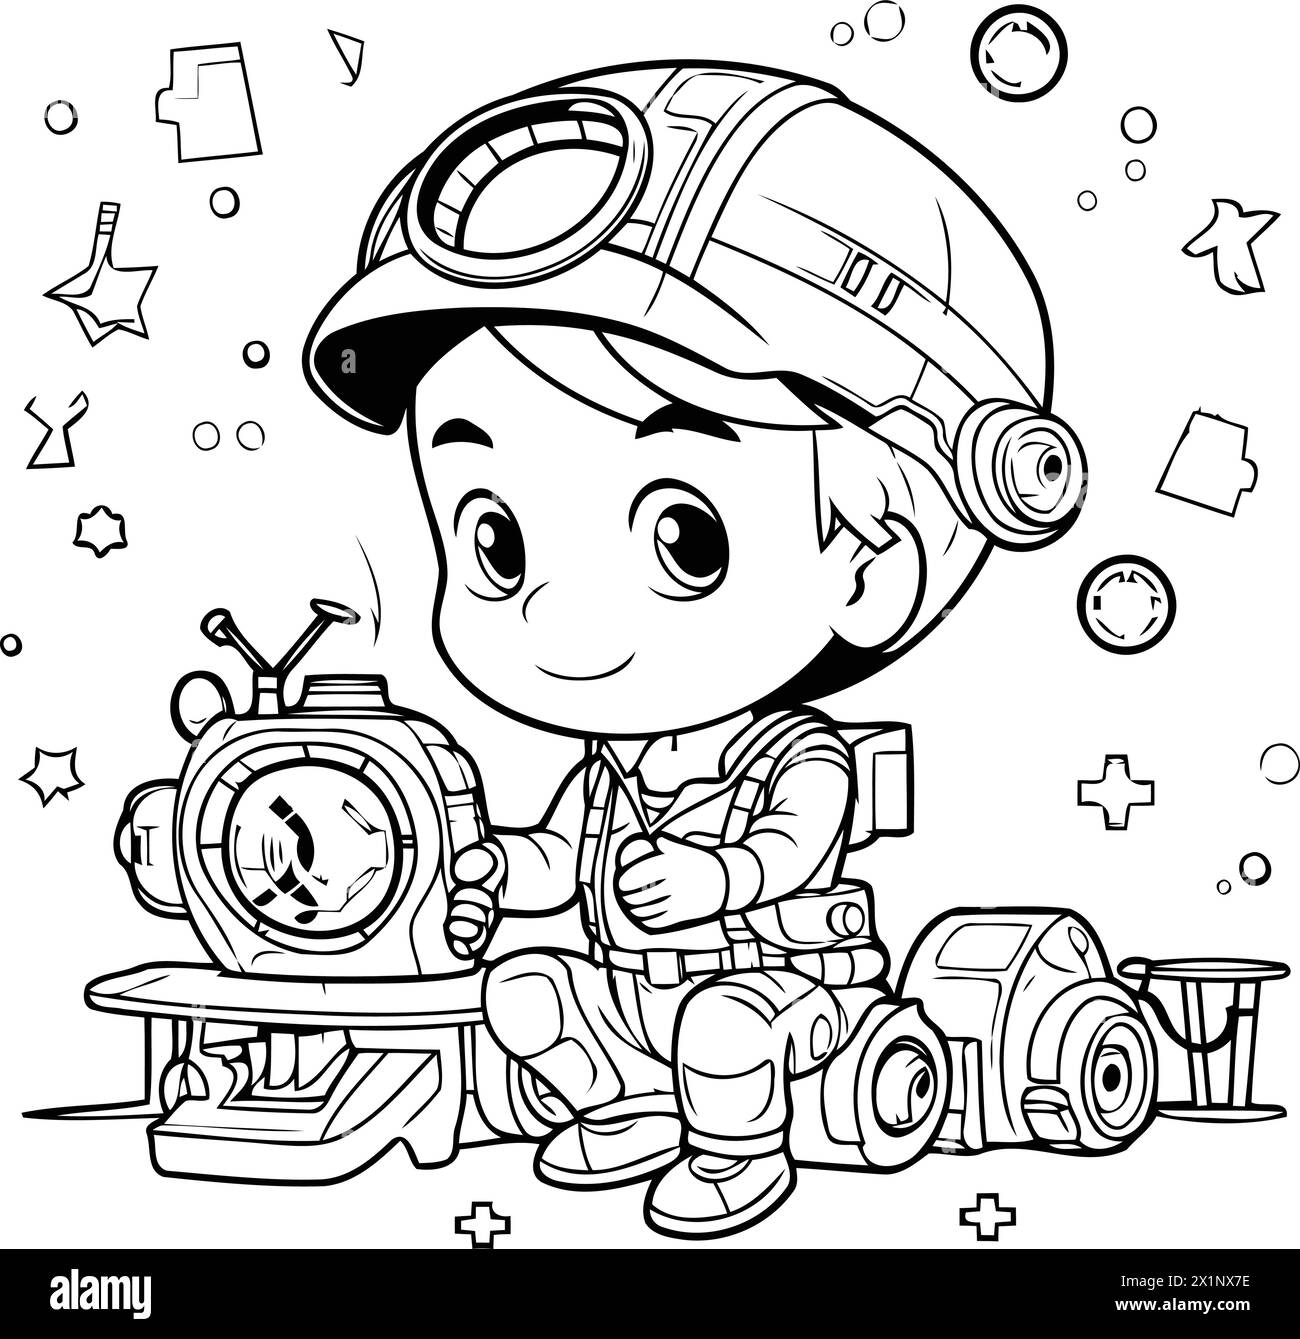 Illustration of a Cute Little Boy Wearing a Astronaut Helmet Stock Vector